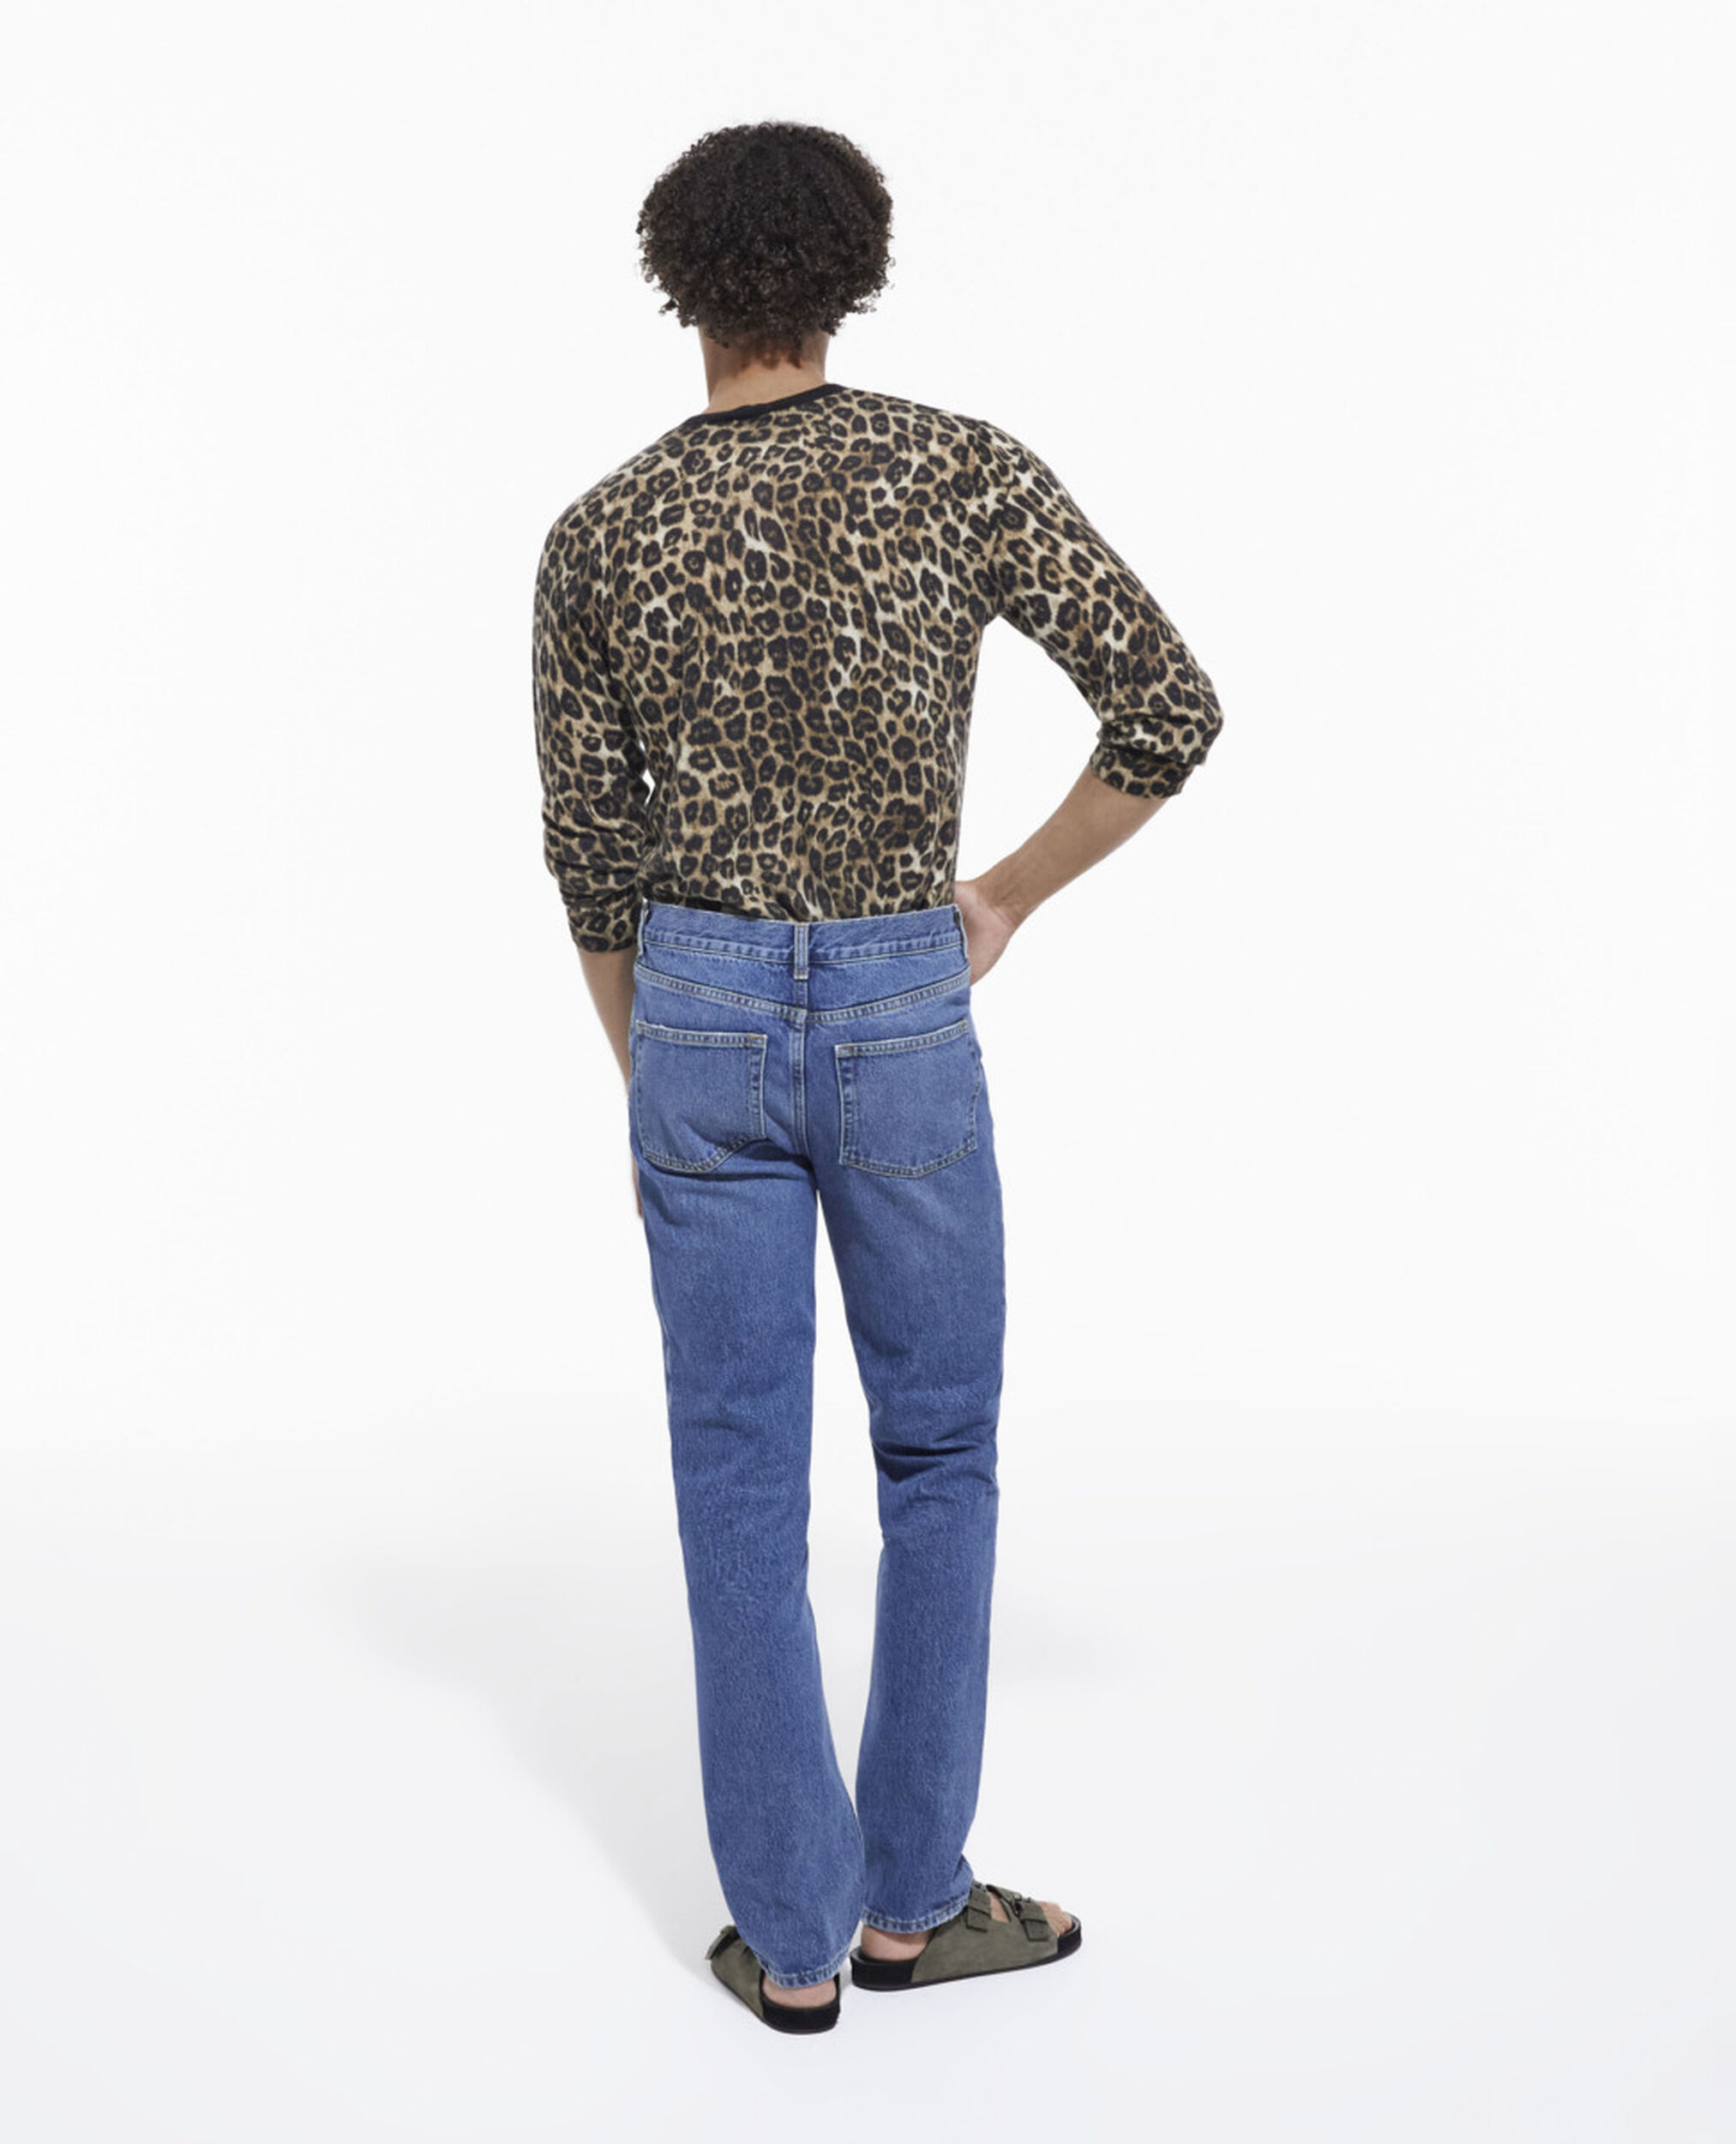 Leopard print cashmere sweater, LEOPARD, hi-res image number null